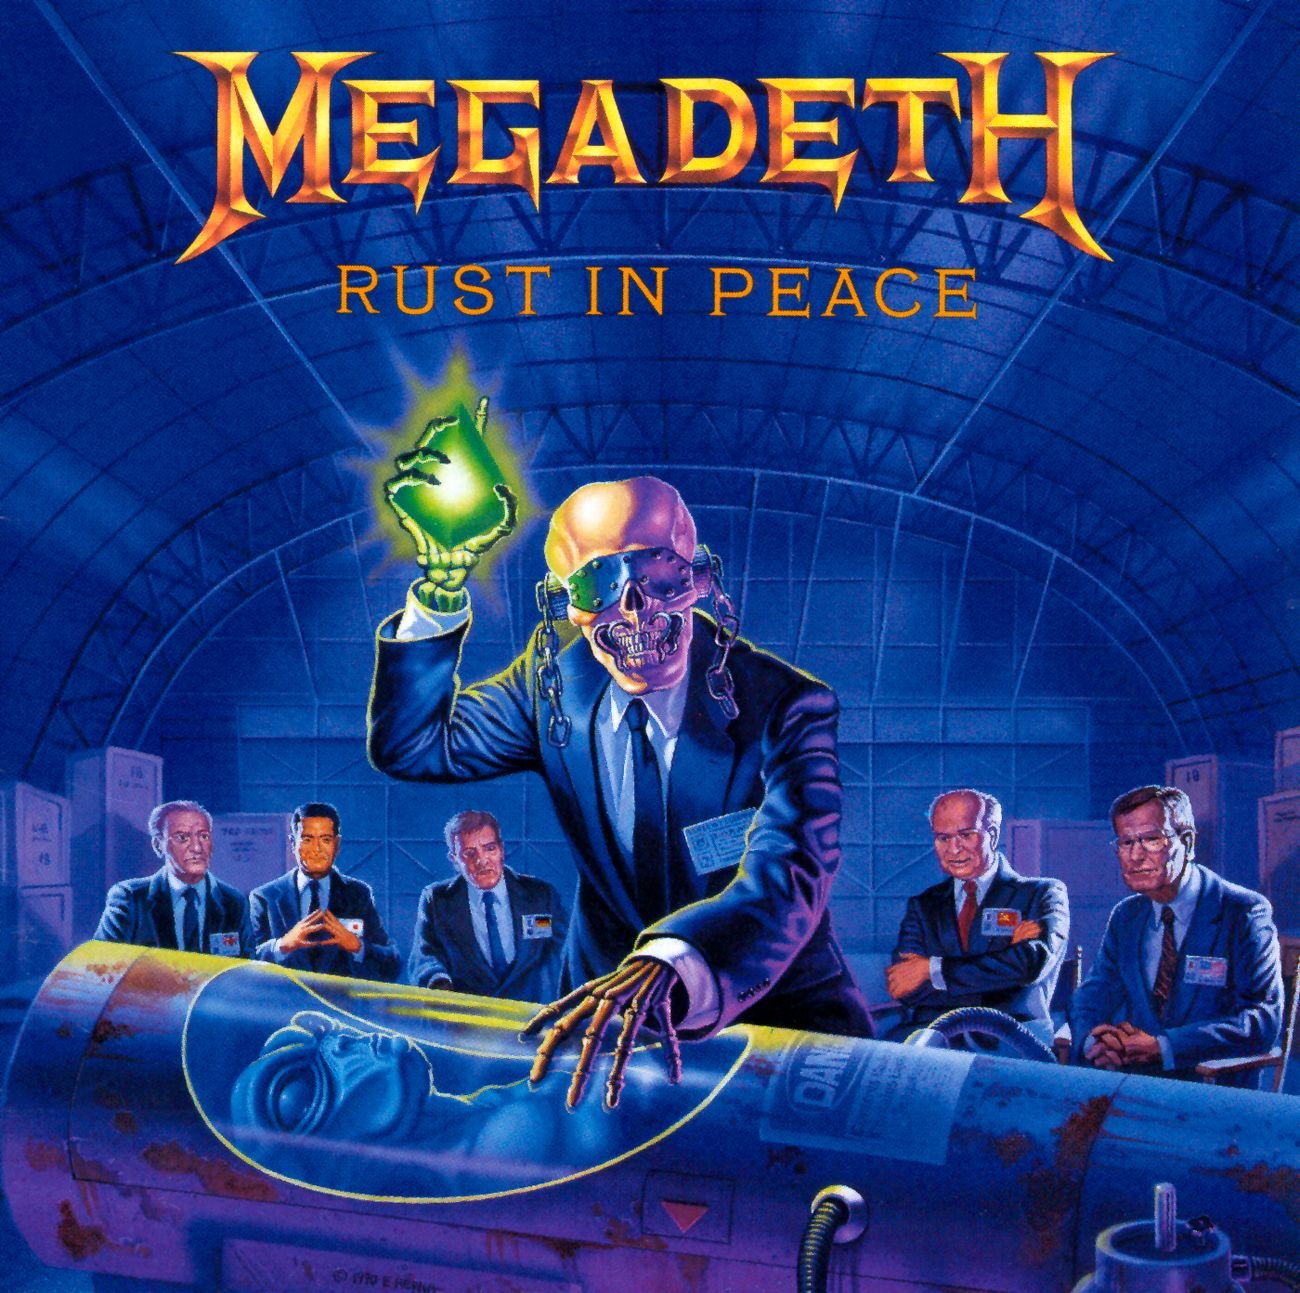 Discos históricos para la guitarra: Megadeth - Rust in Peace | Guitarristas